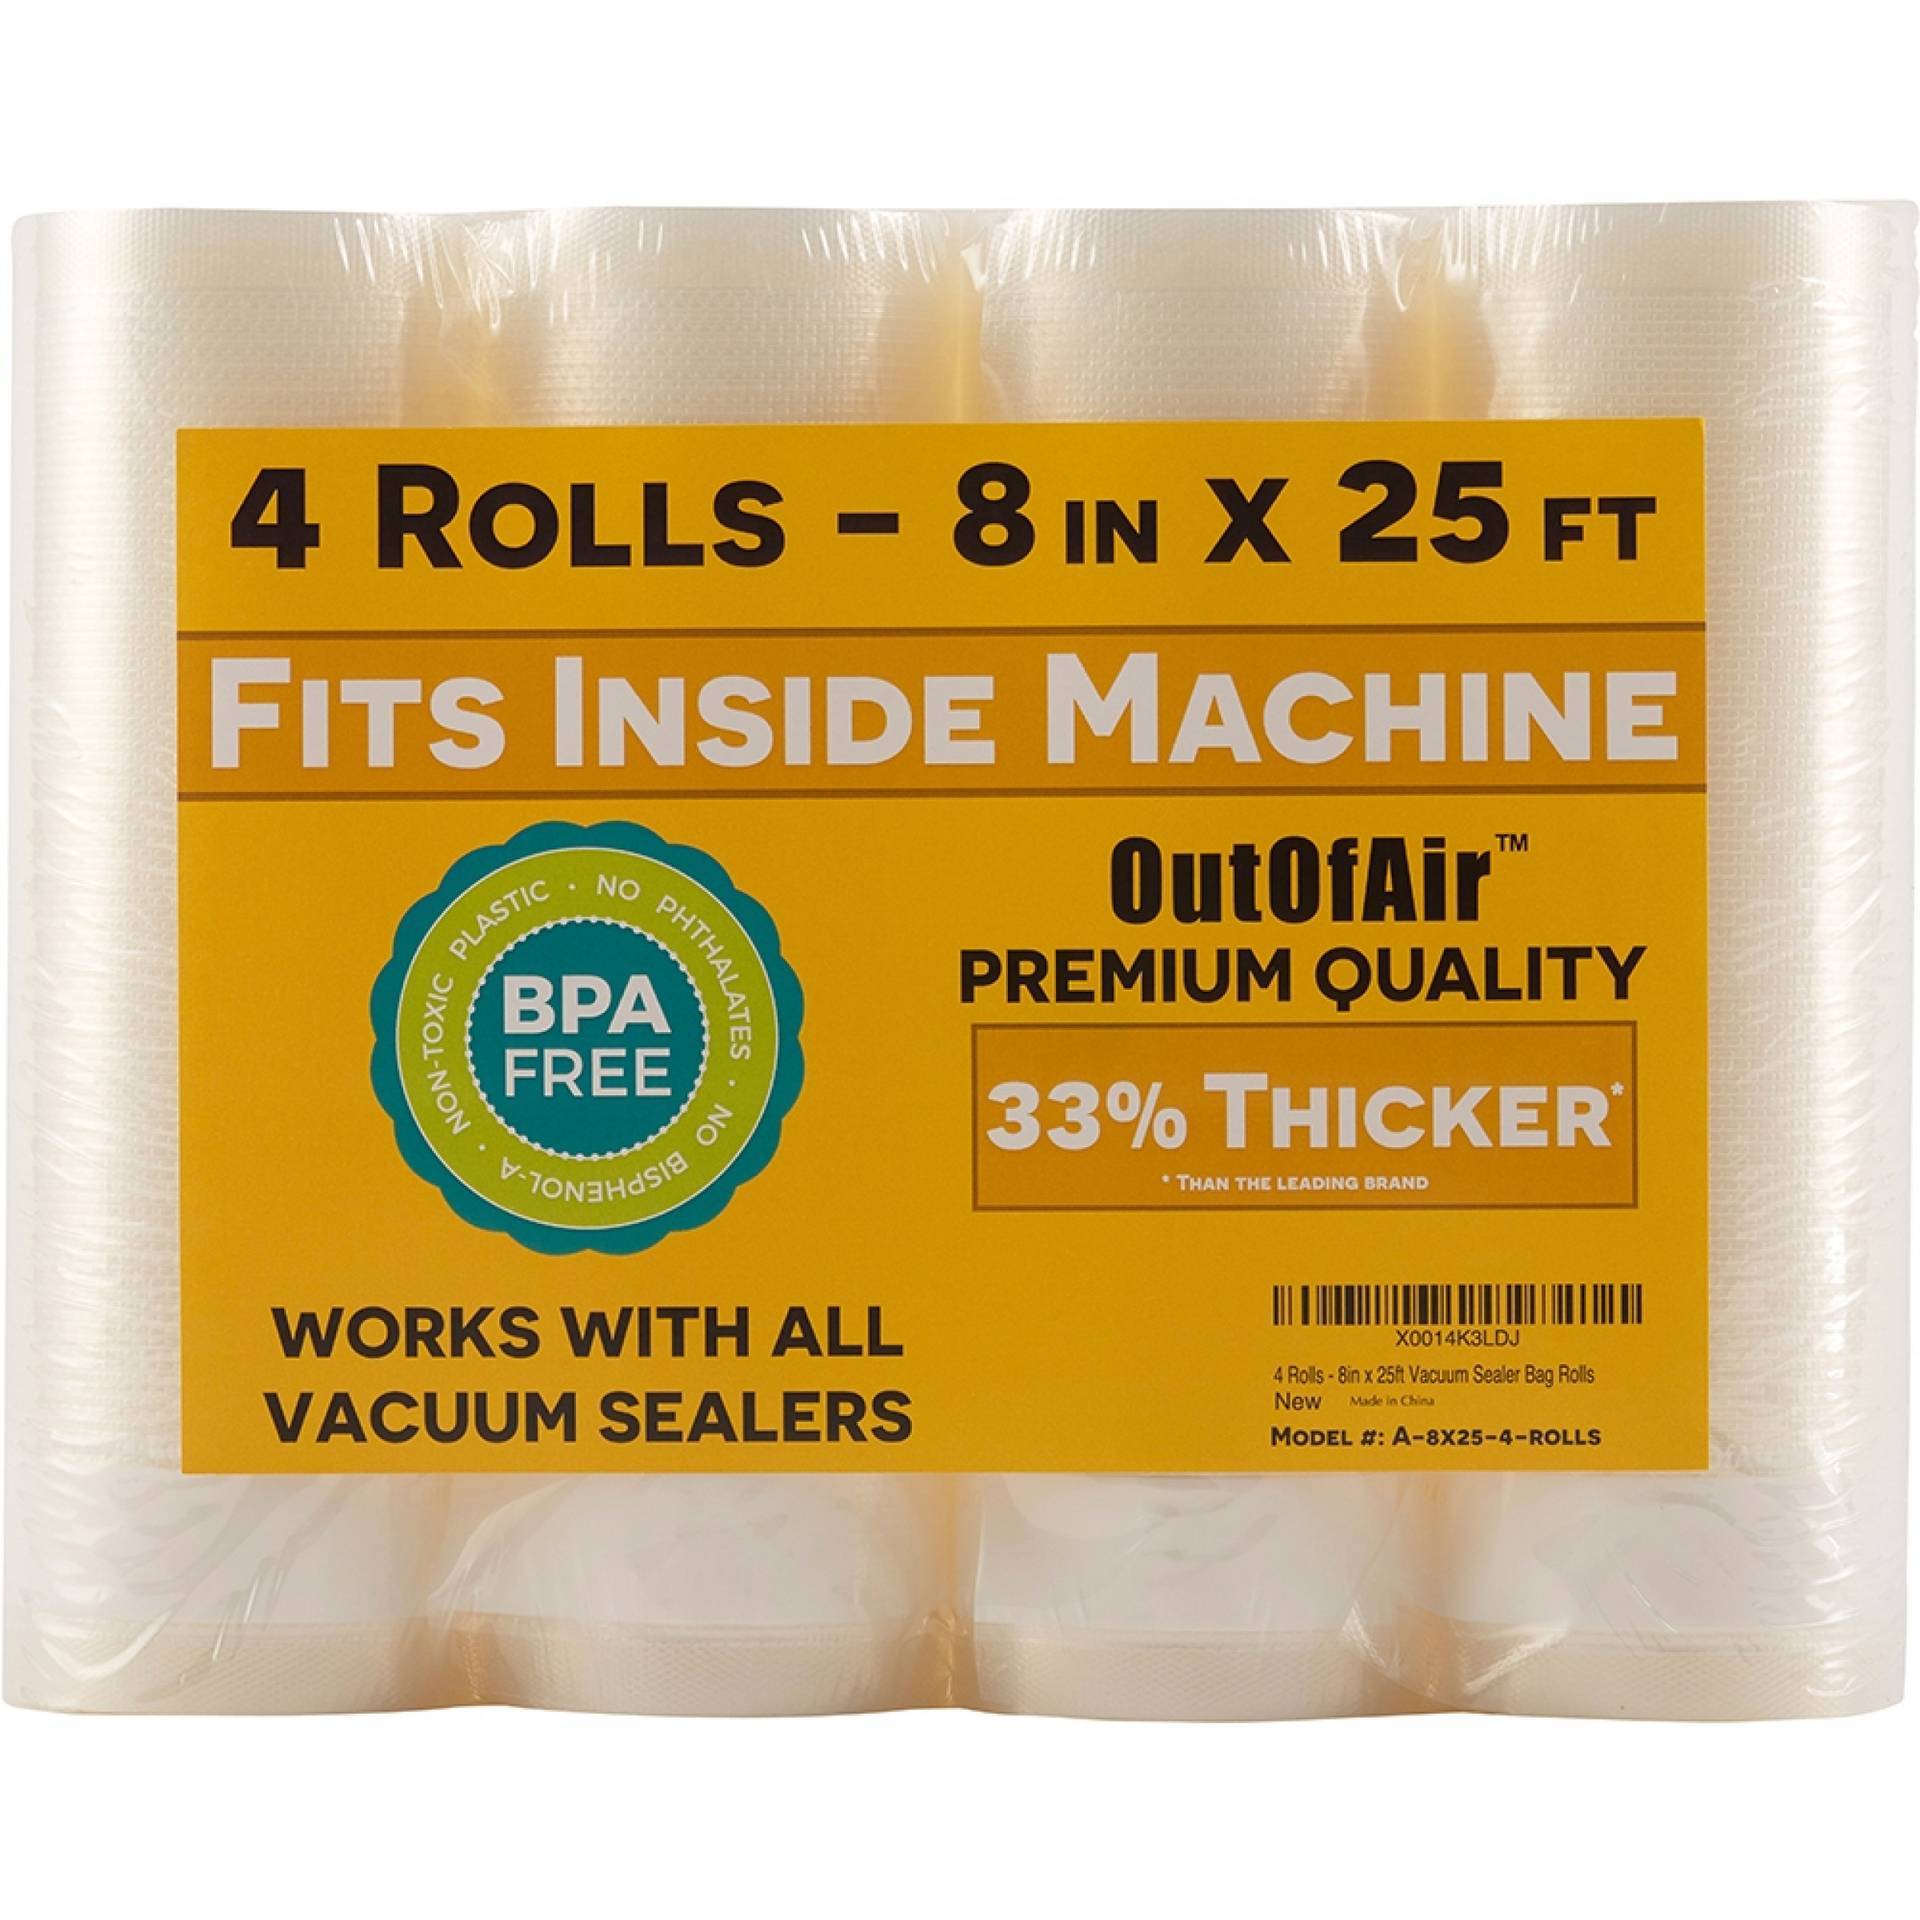 8 & 11 25ft Rolls (Fit Inside) 4 Rolls (2 of Each, 100ft total) OutOfAir Vacuum Sealer